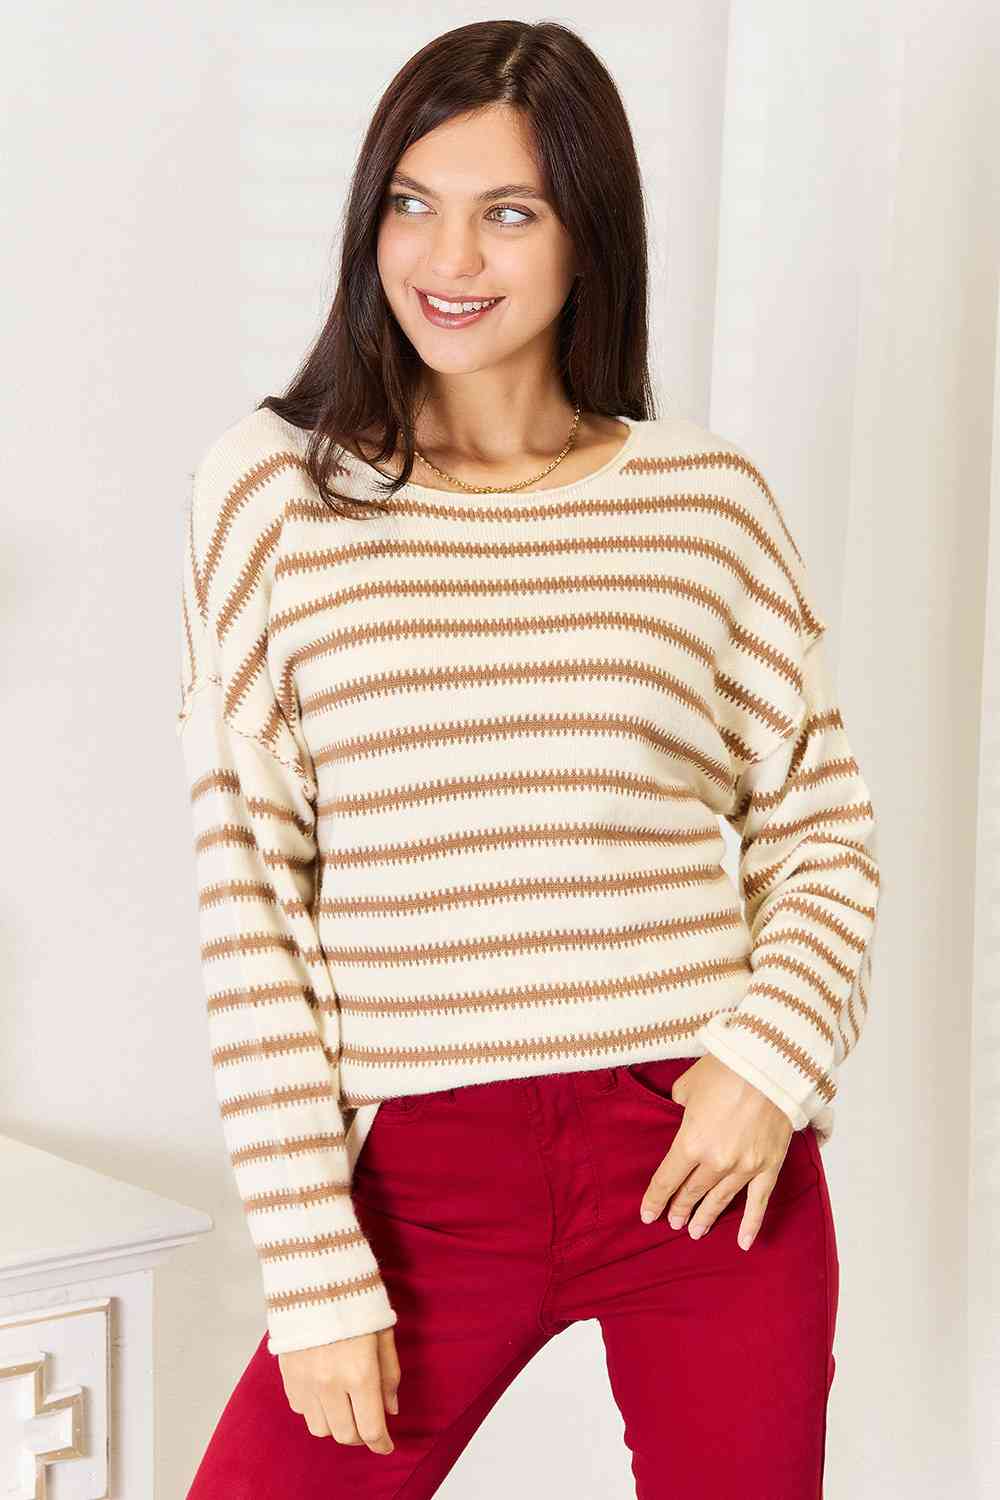 Double Take Striped Boat Neck Sweater - Tigbuls Variety Fashion